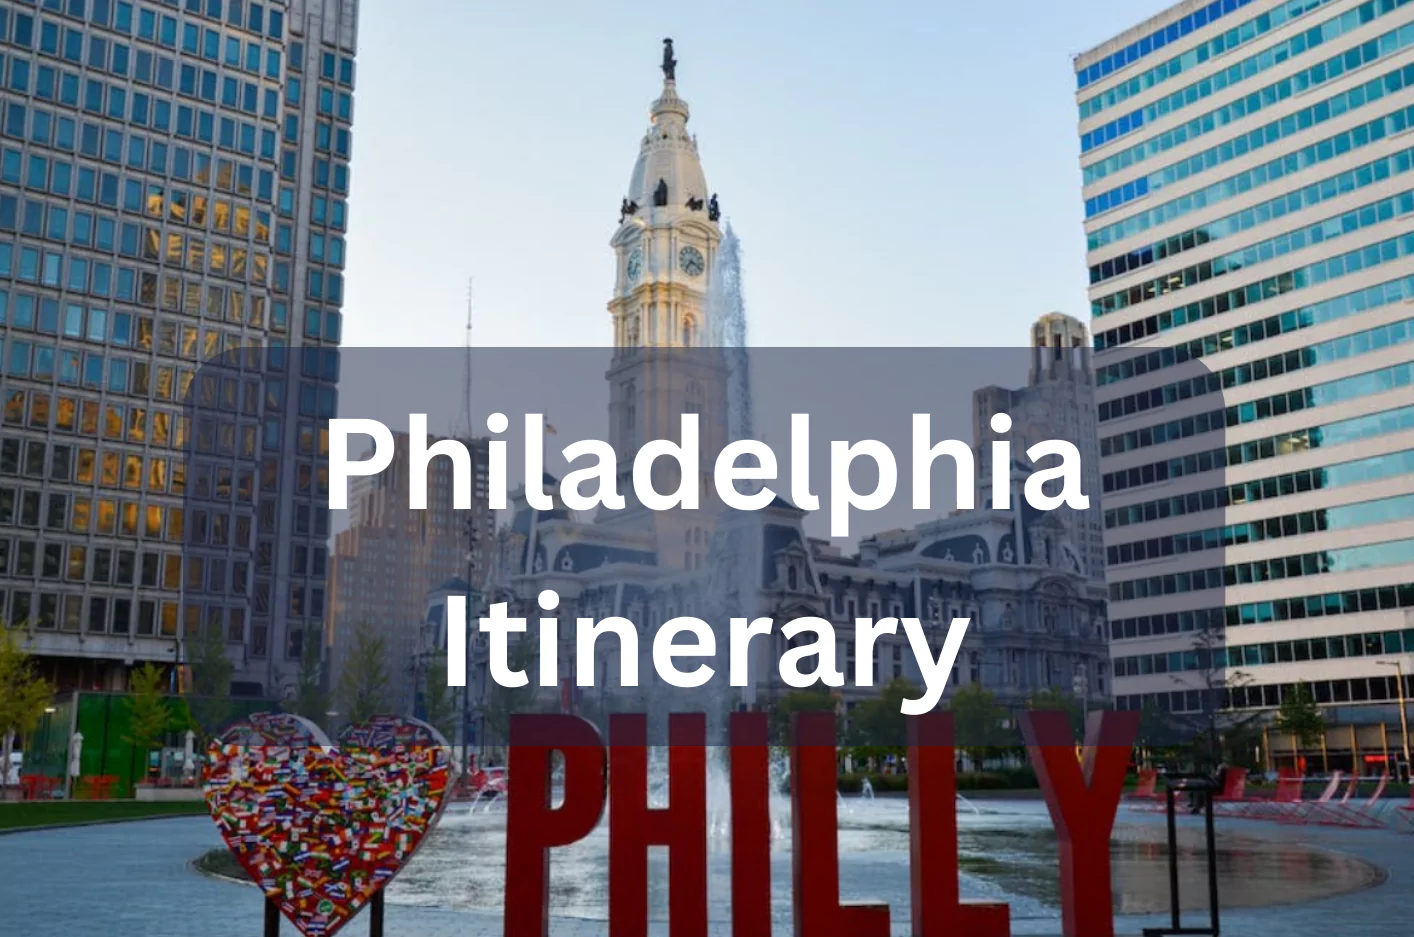 Philadelphia Itinerary